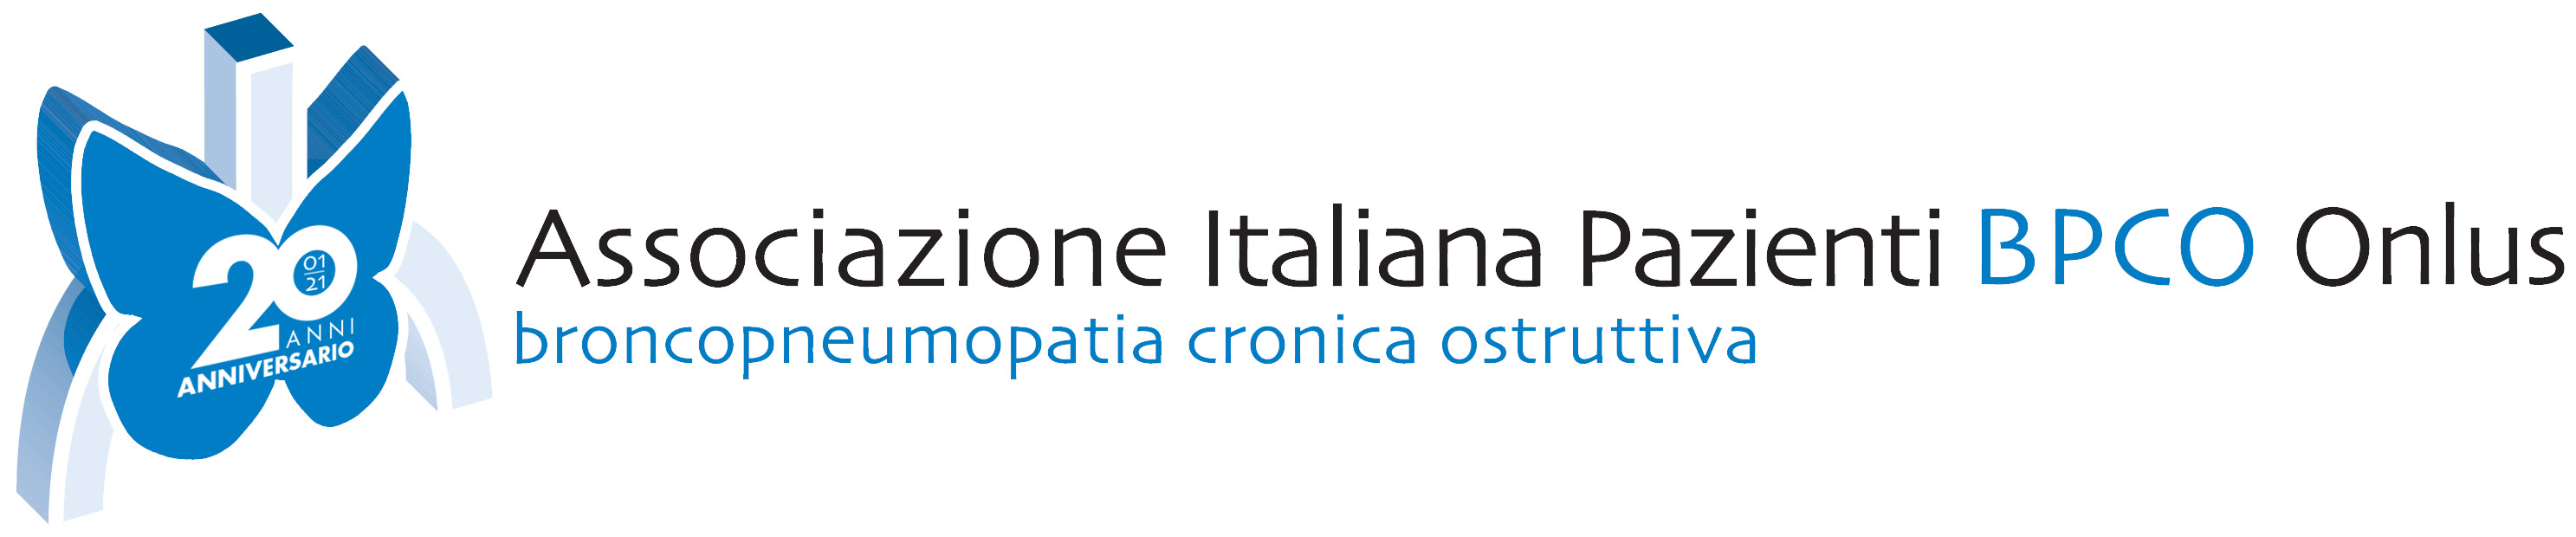 Associazione Italiana Pazienti BPCO ONLUS